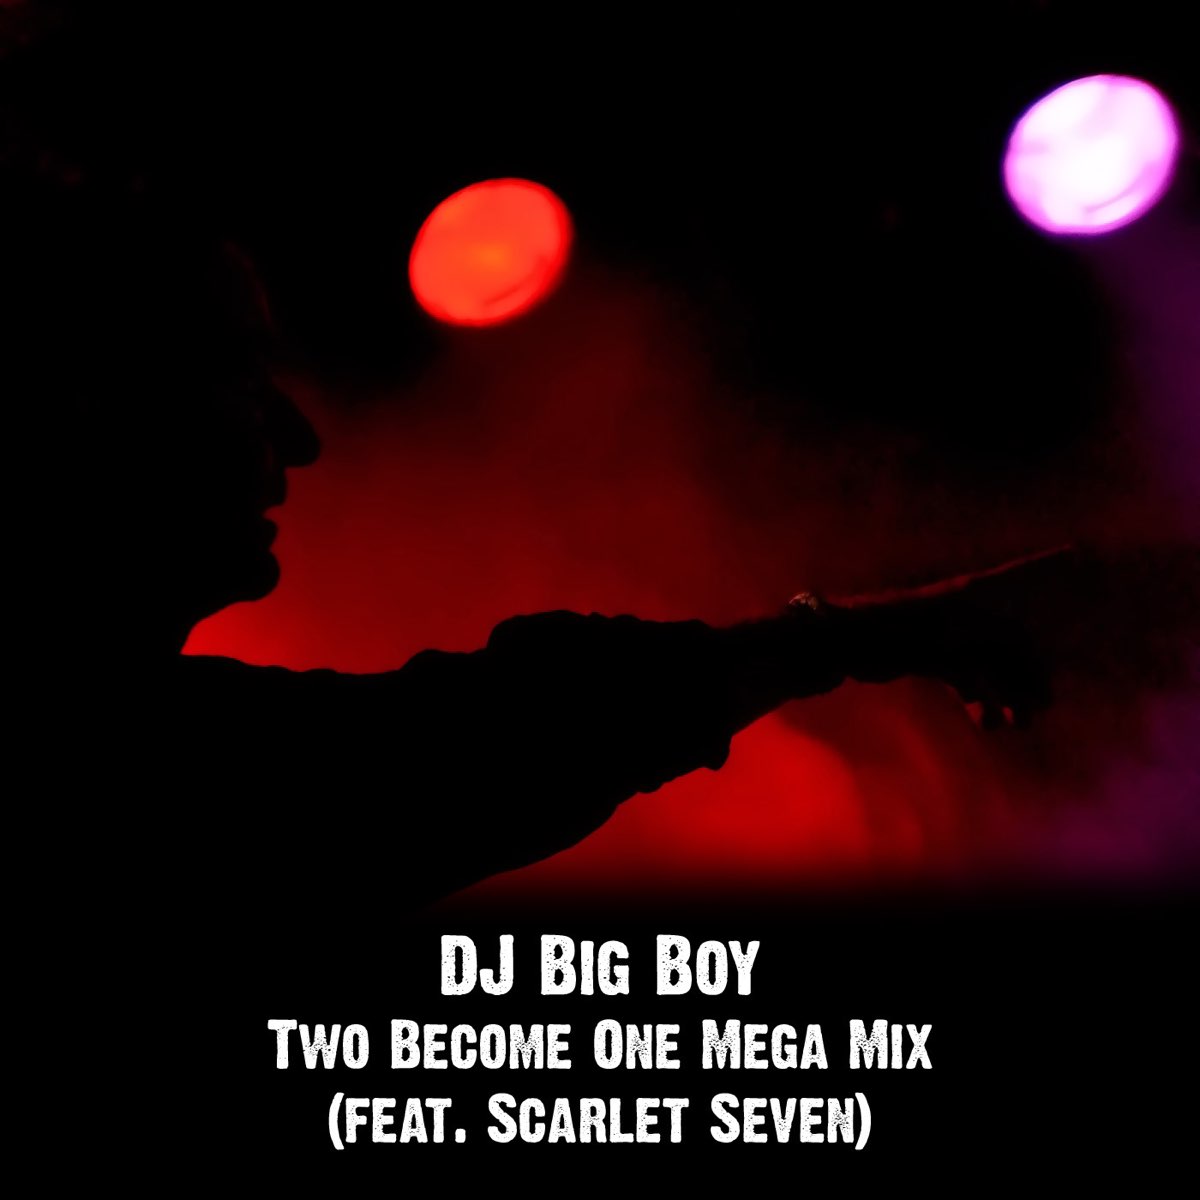 Two become one. Big boy песня. Песня big boy SZA. Песня big boy на русском.